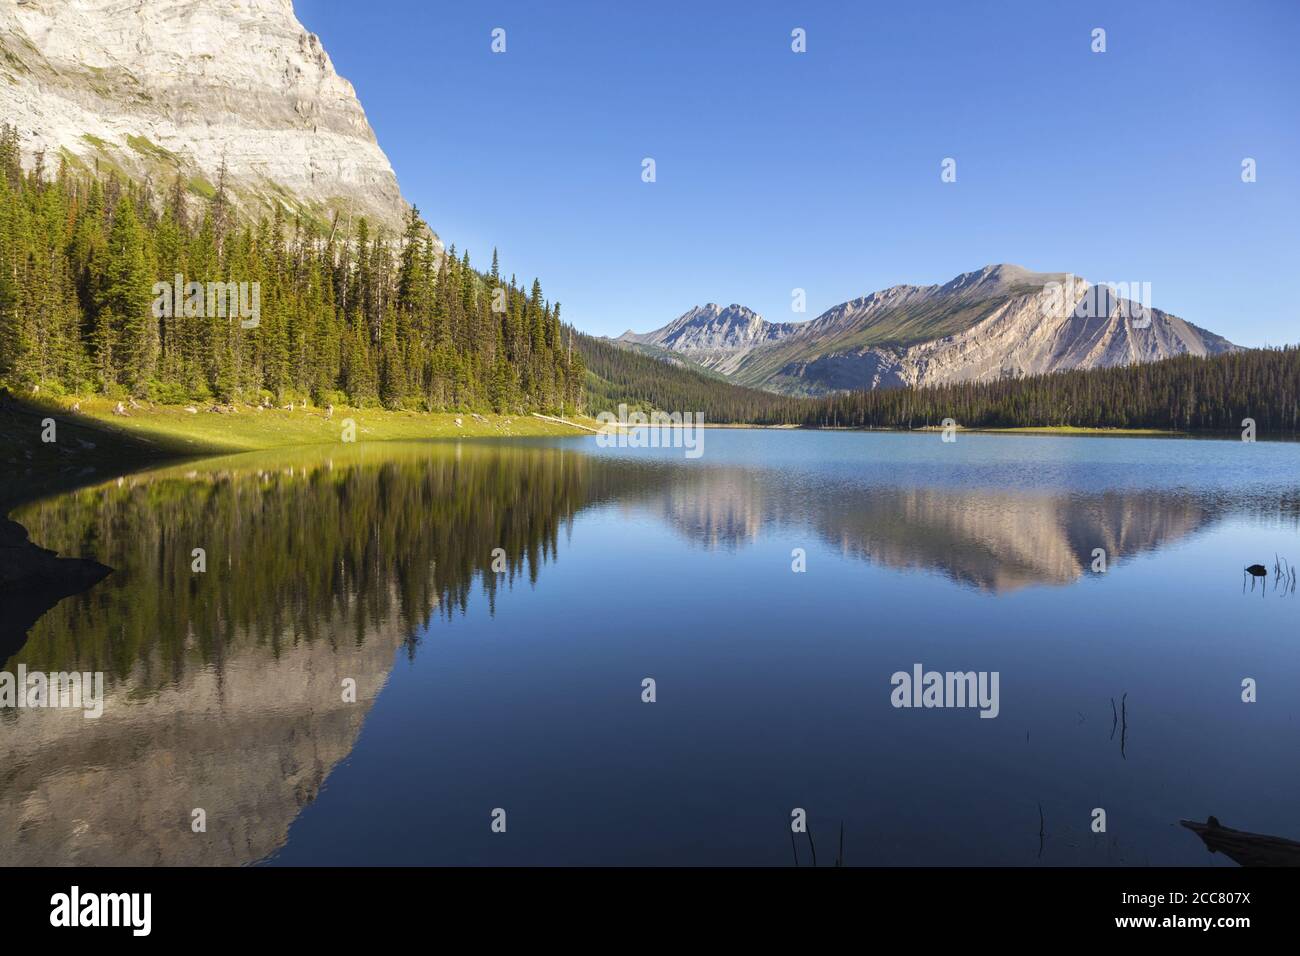 Symmetrie in der Natur, Mountain Peaks Reflexion Calm Water Scenic Alpine Hidden Lake. Wunderschöne Landschaft Kananaskis Country Wander, Alberta Kanada Stockfoto